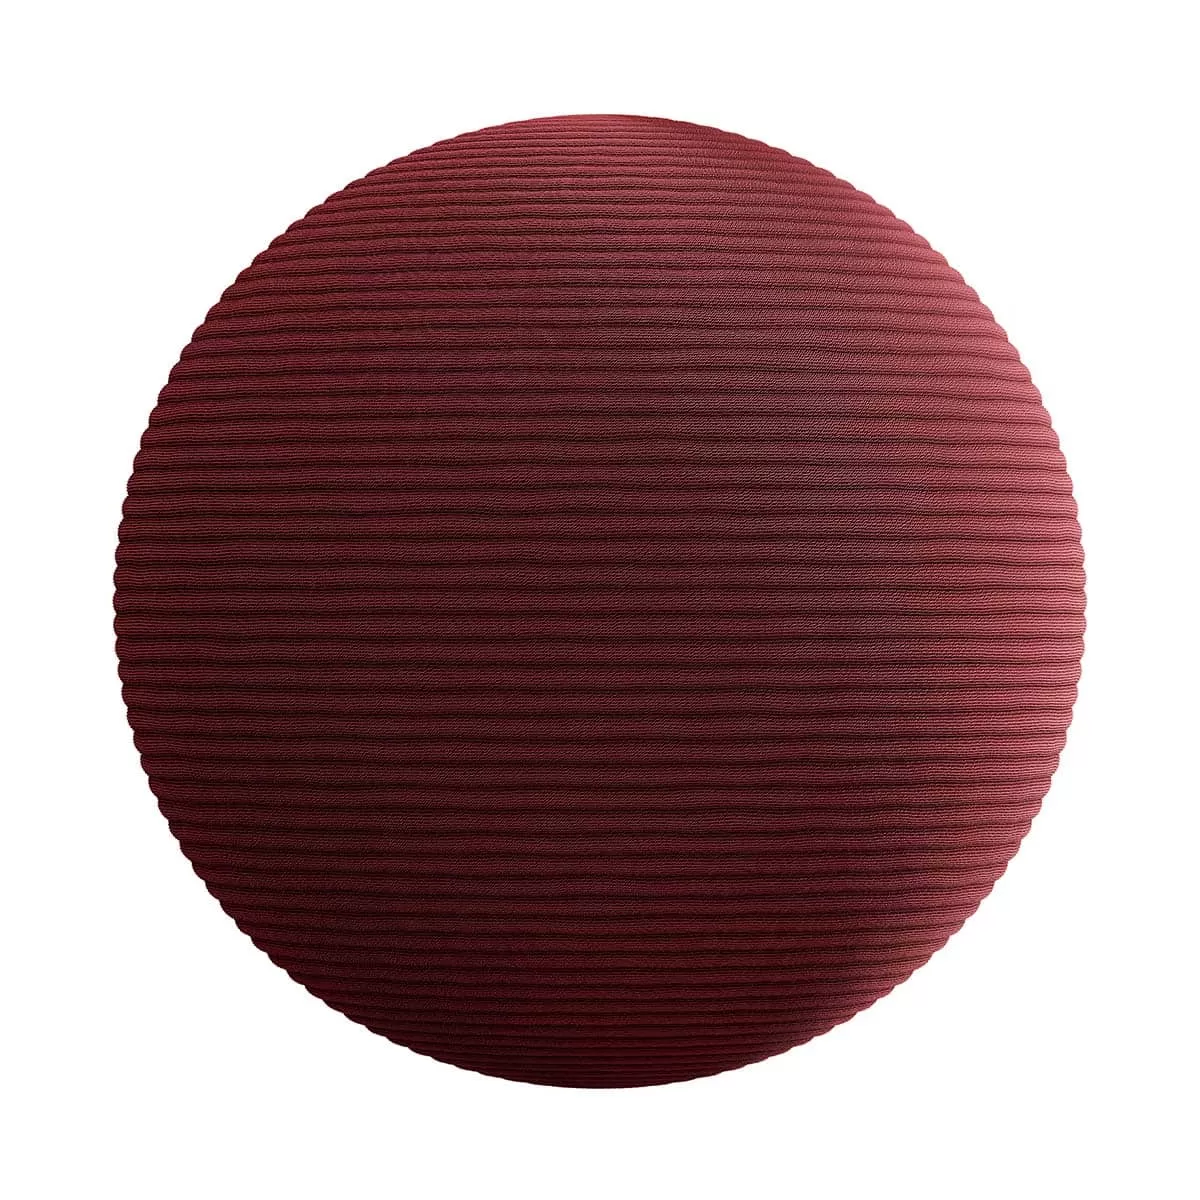 PBR Textures Volume 27 – Fabrics – 4K – 8K – striped_red_fabric_26_16